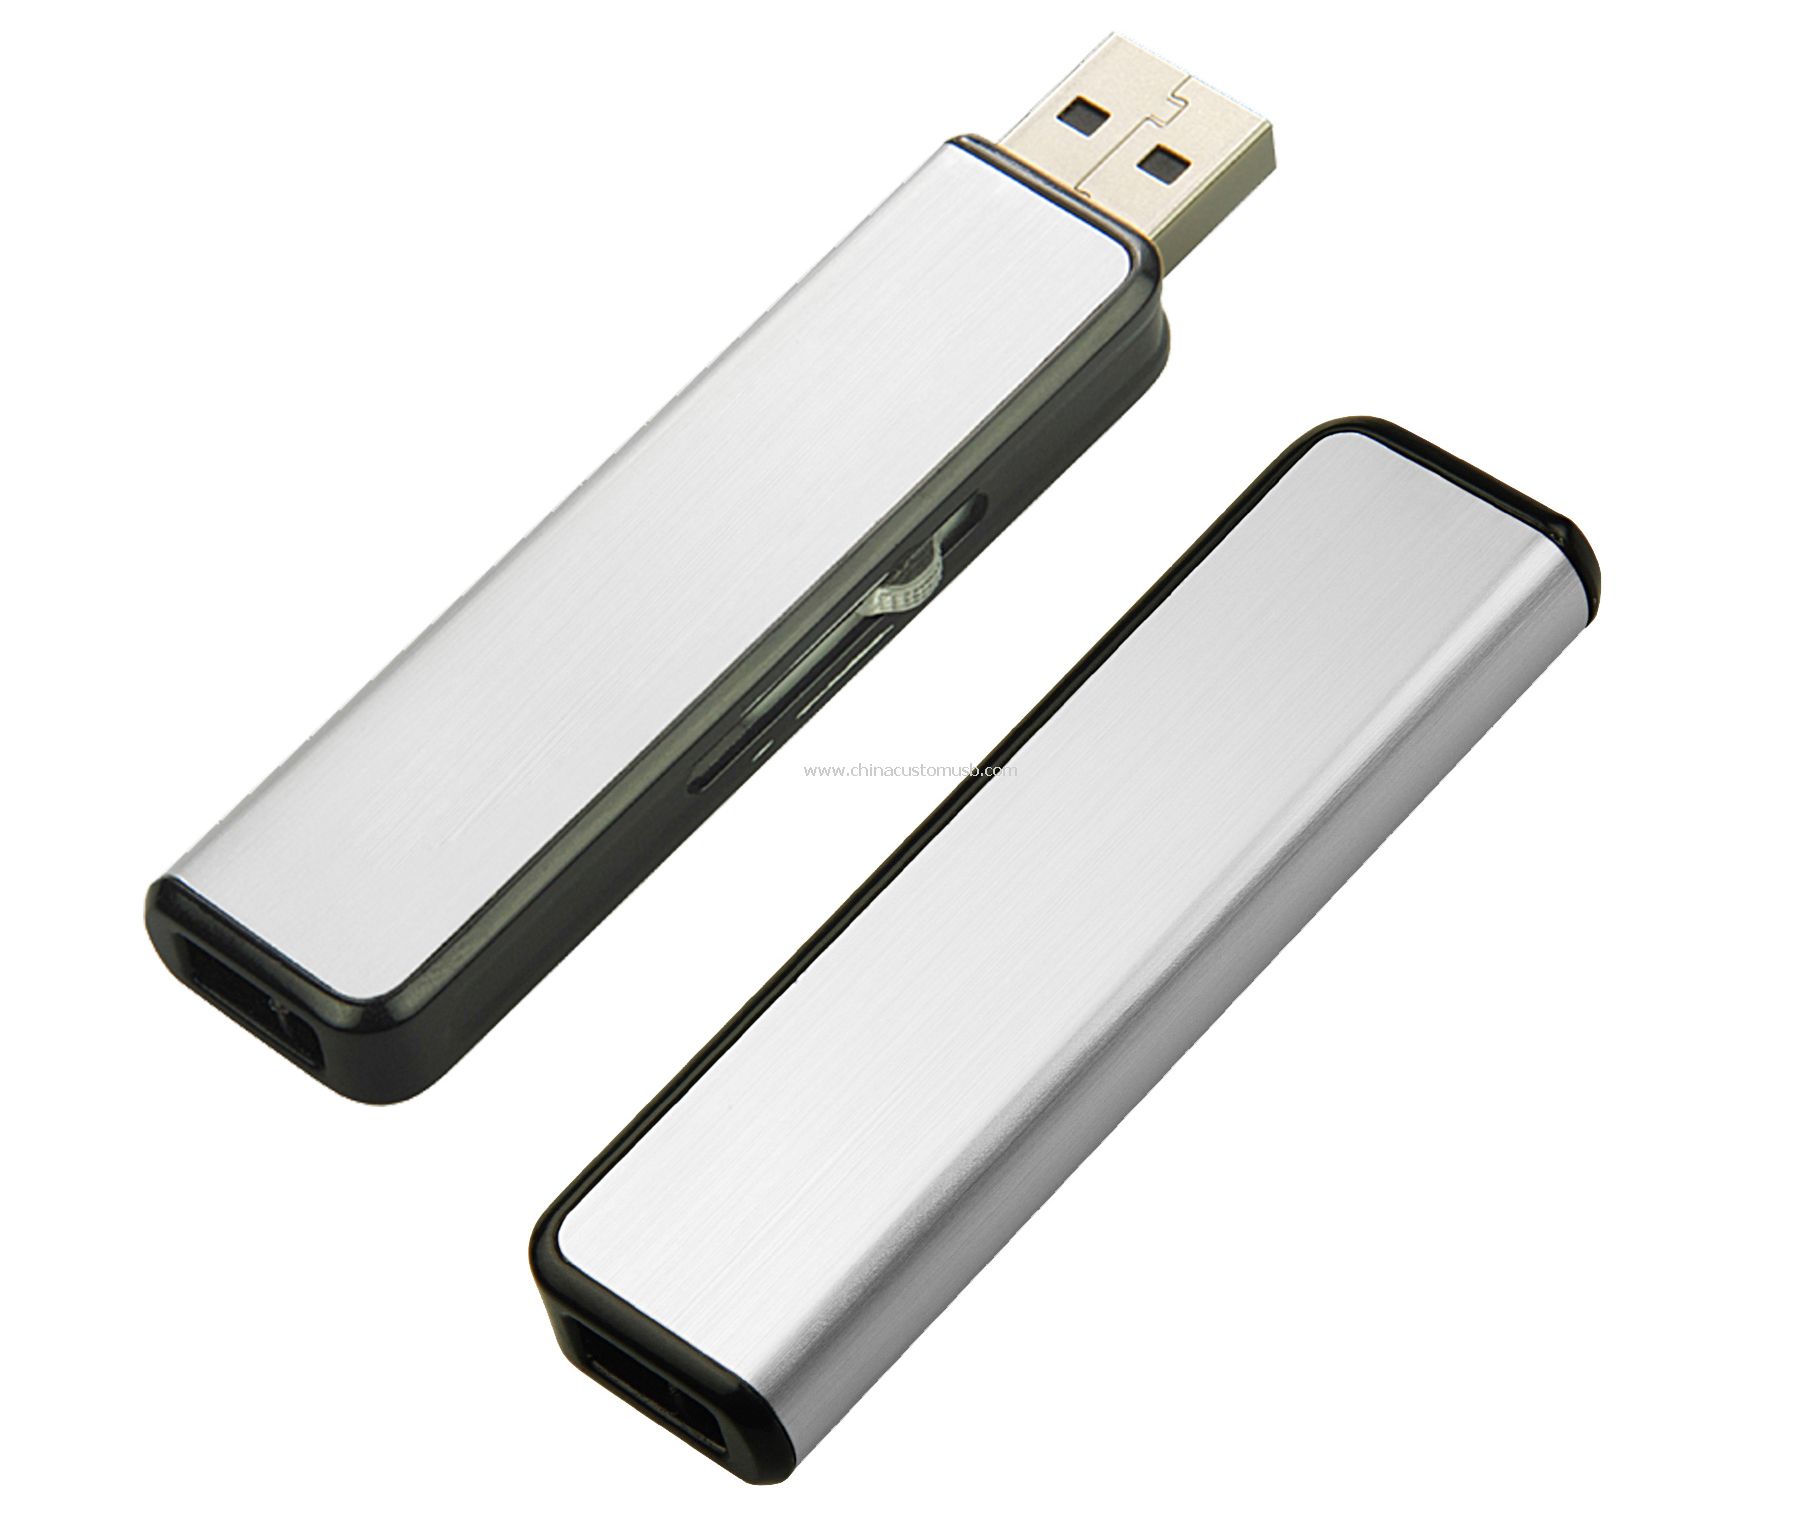 Push-Pull USB Drive with Aluminium cover